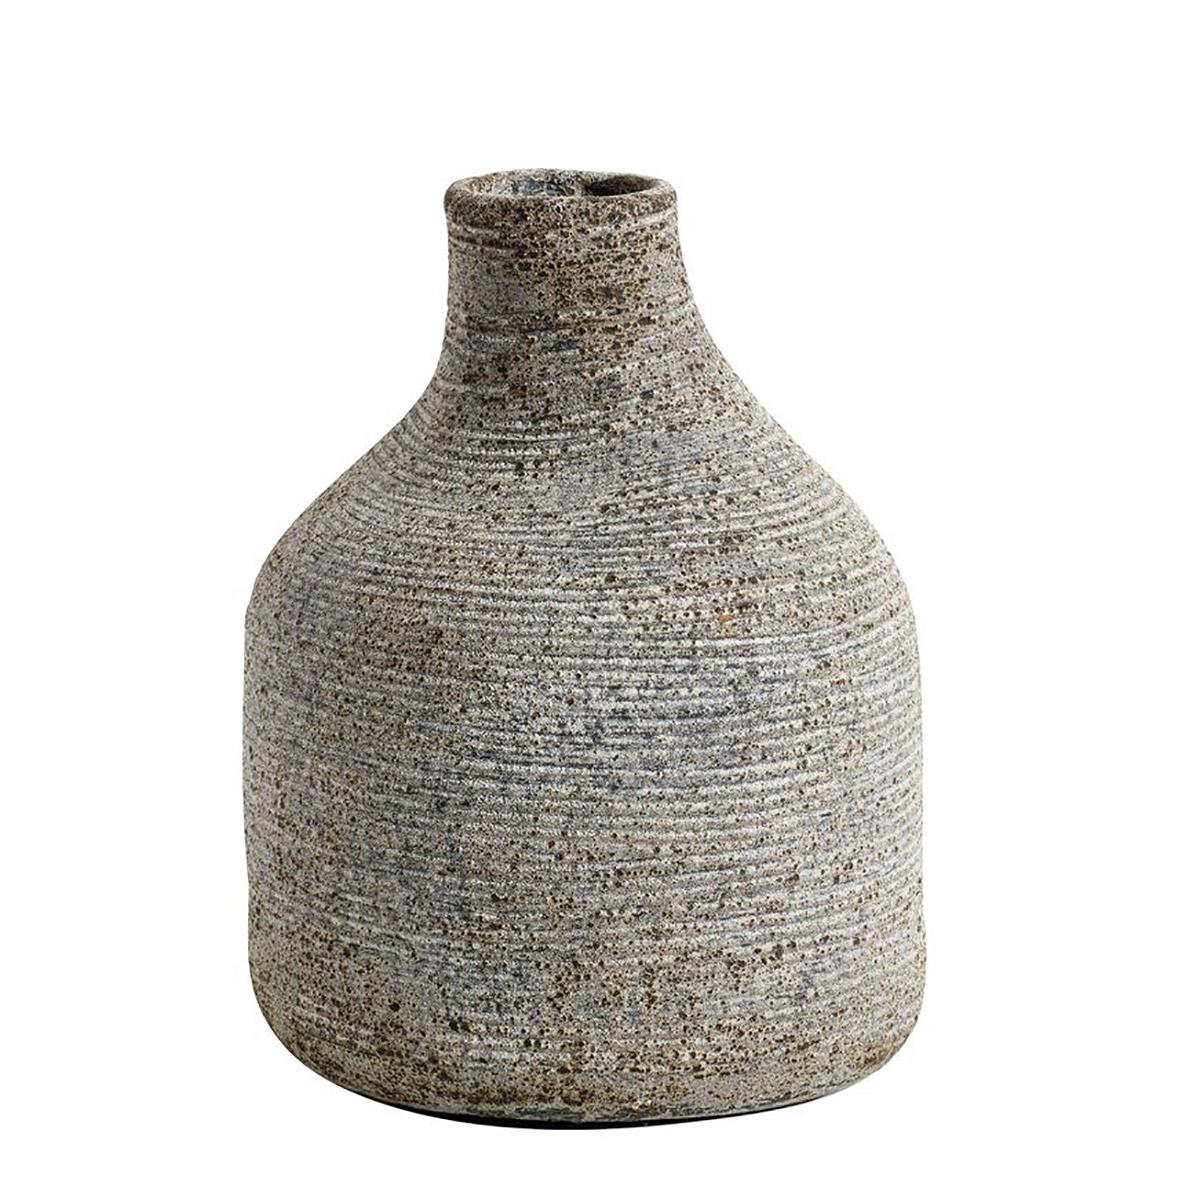 affældige Uskyld instans Vase Stain Small - Grå/Brun | shop.muubs.com